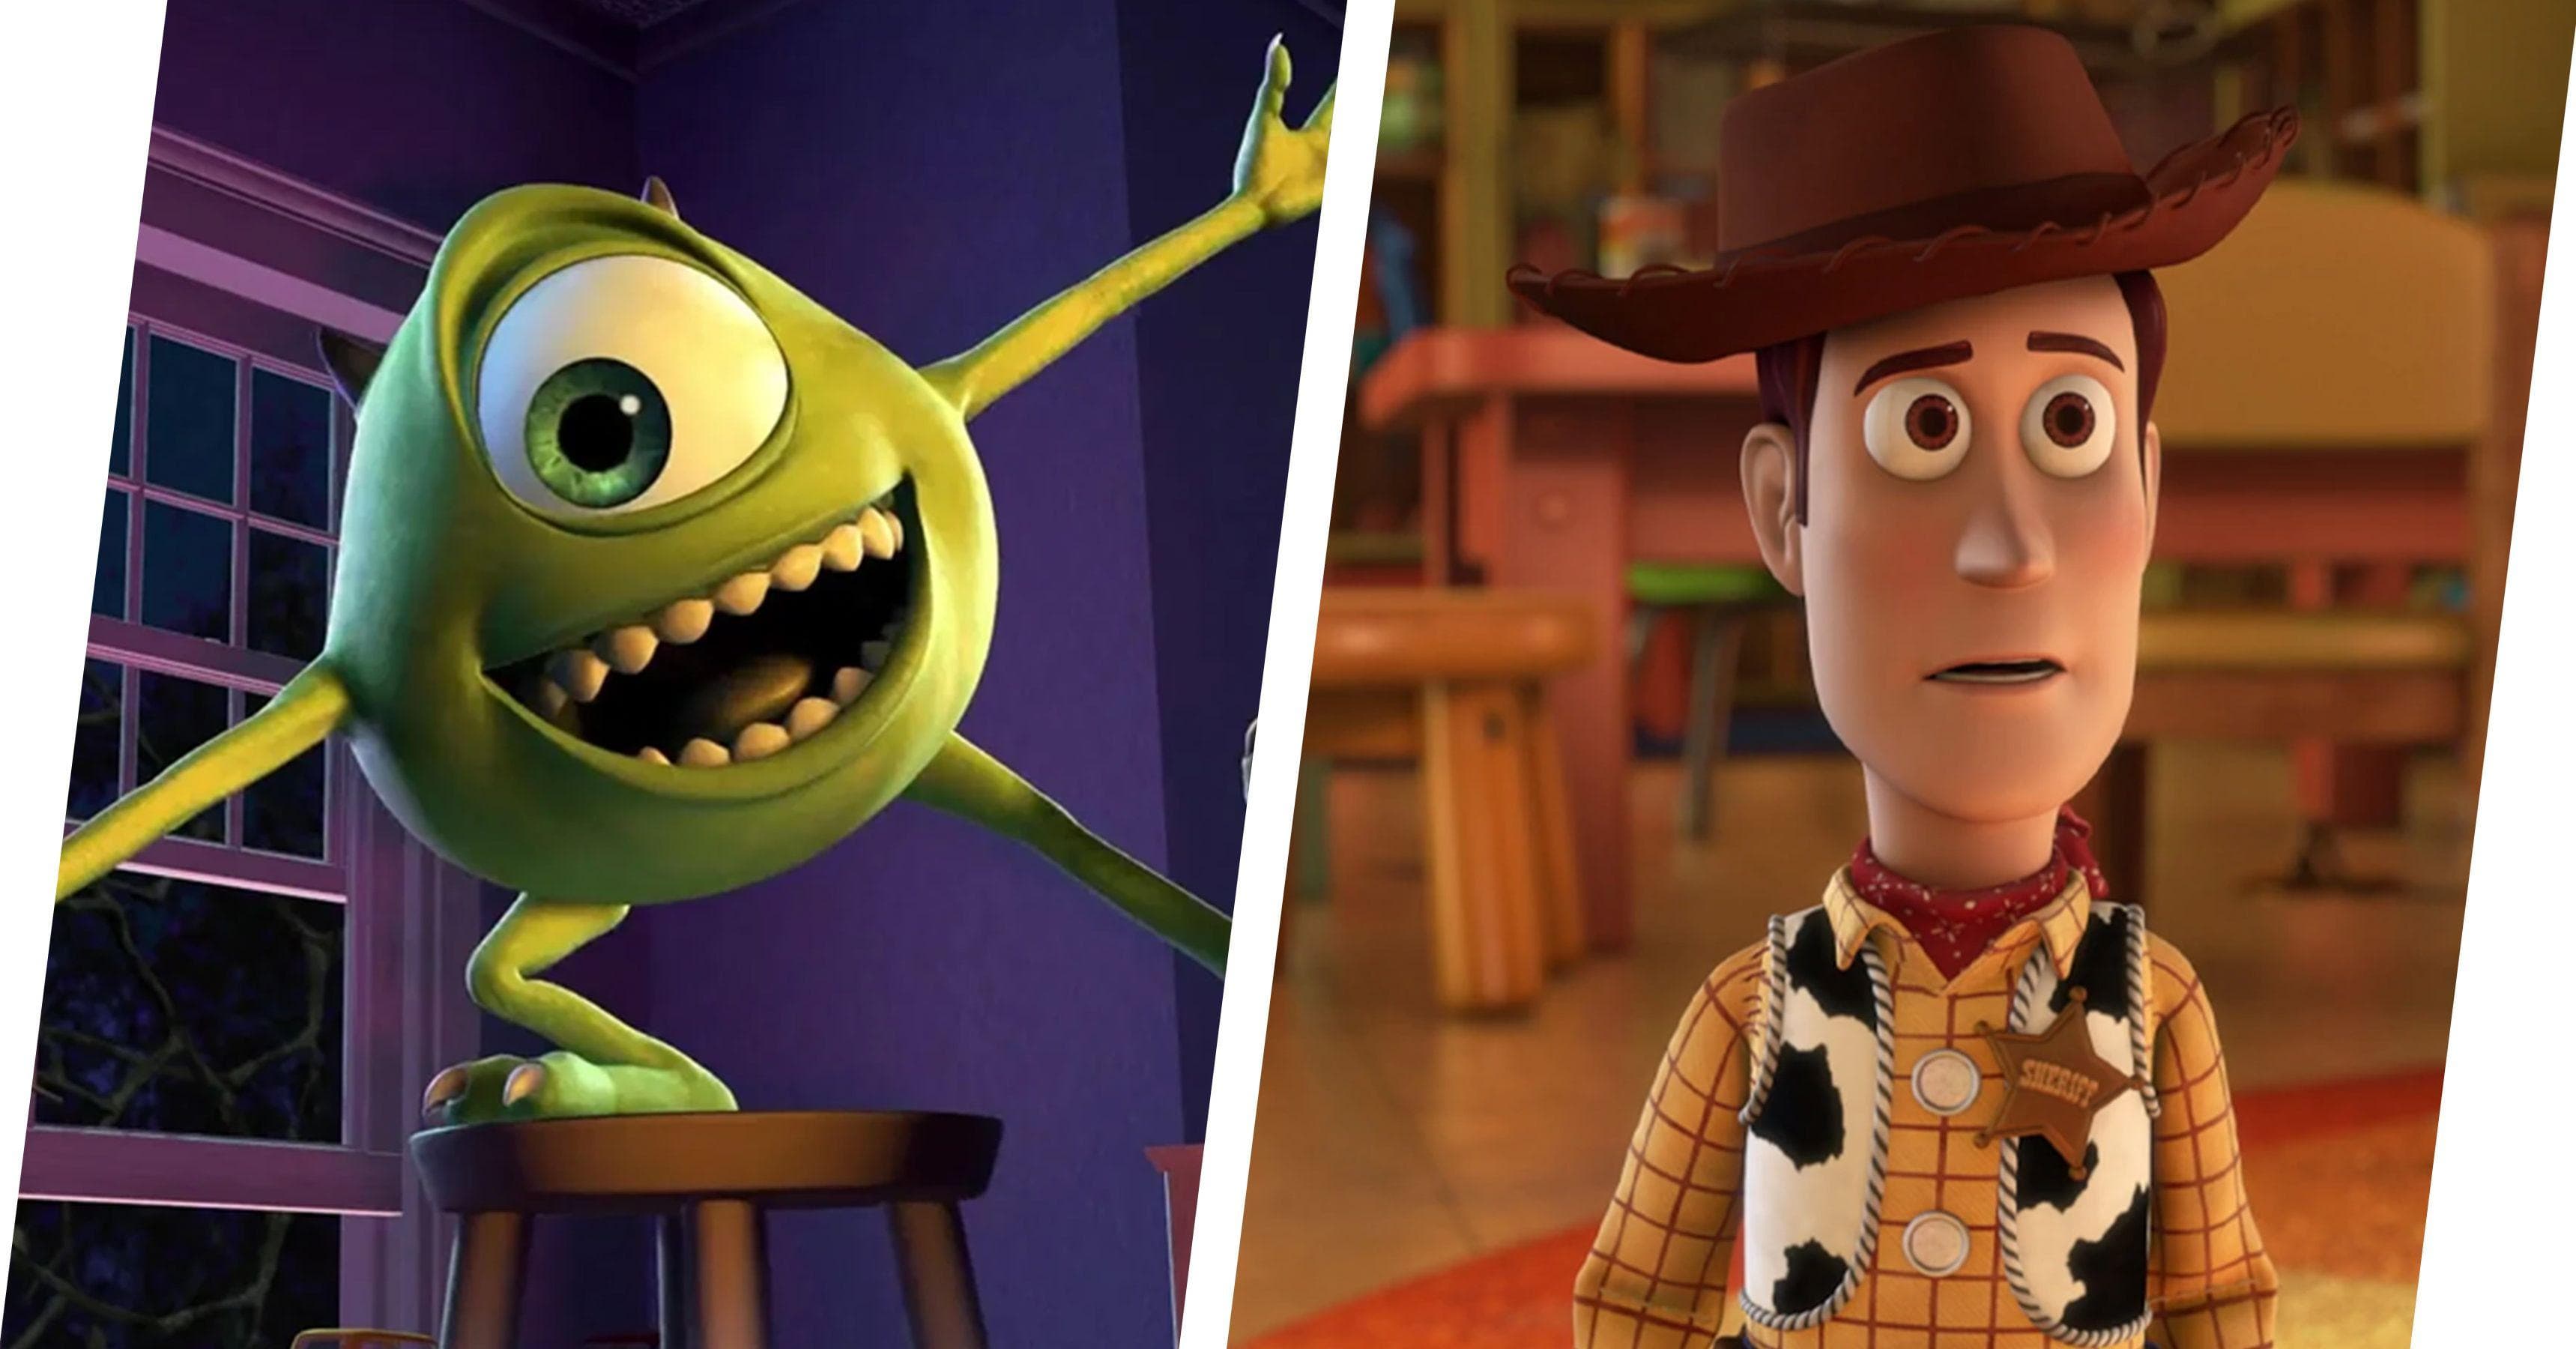 Dash - The Incredibles - Pixar - Character profile 